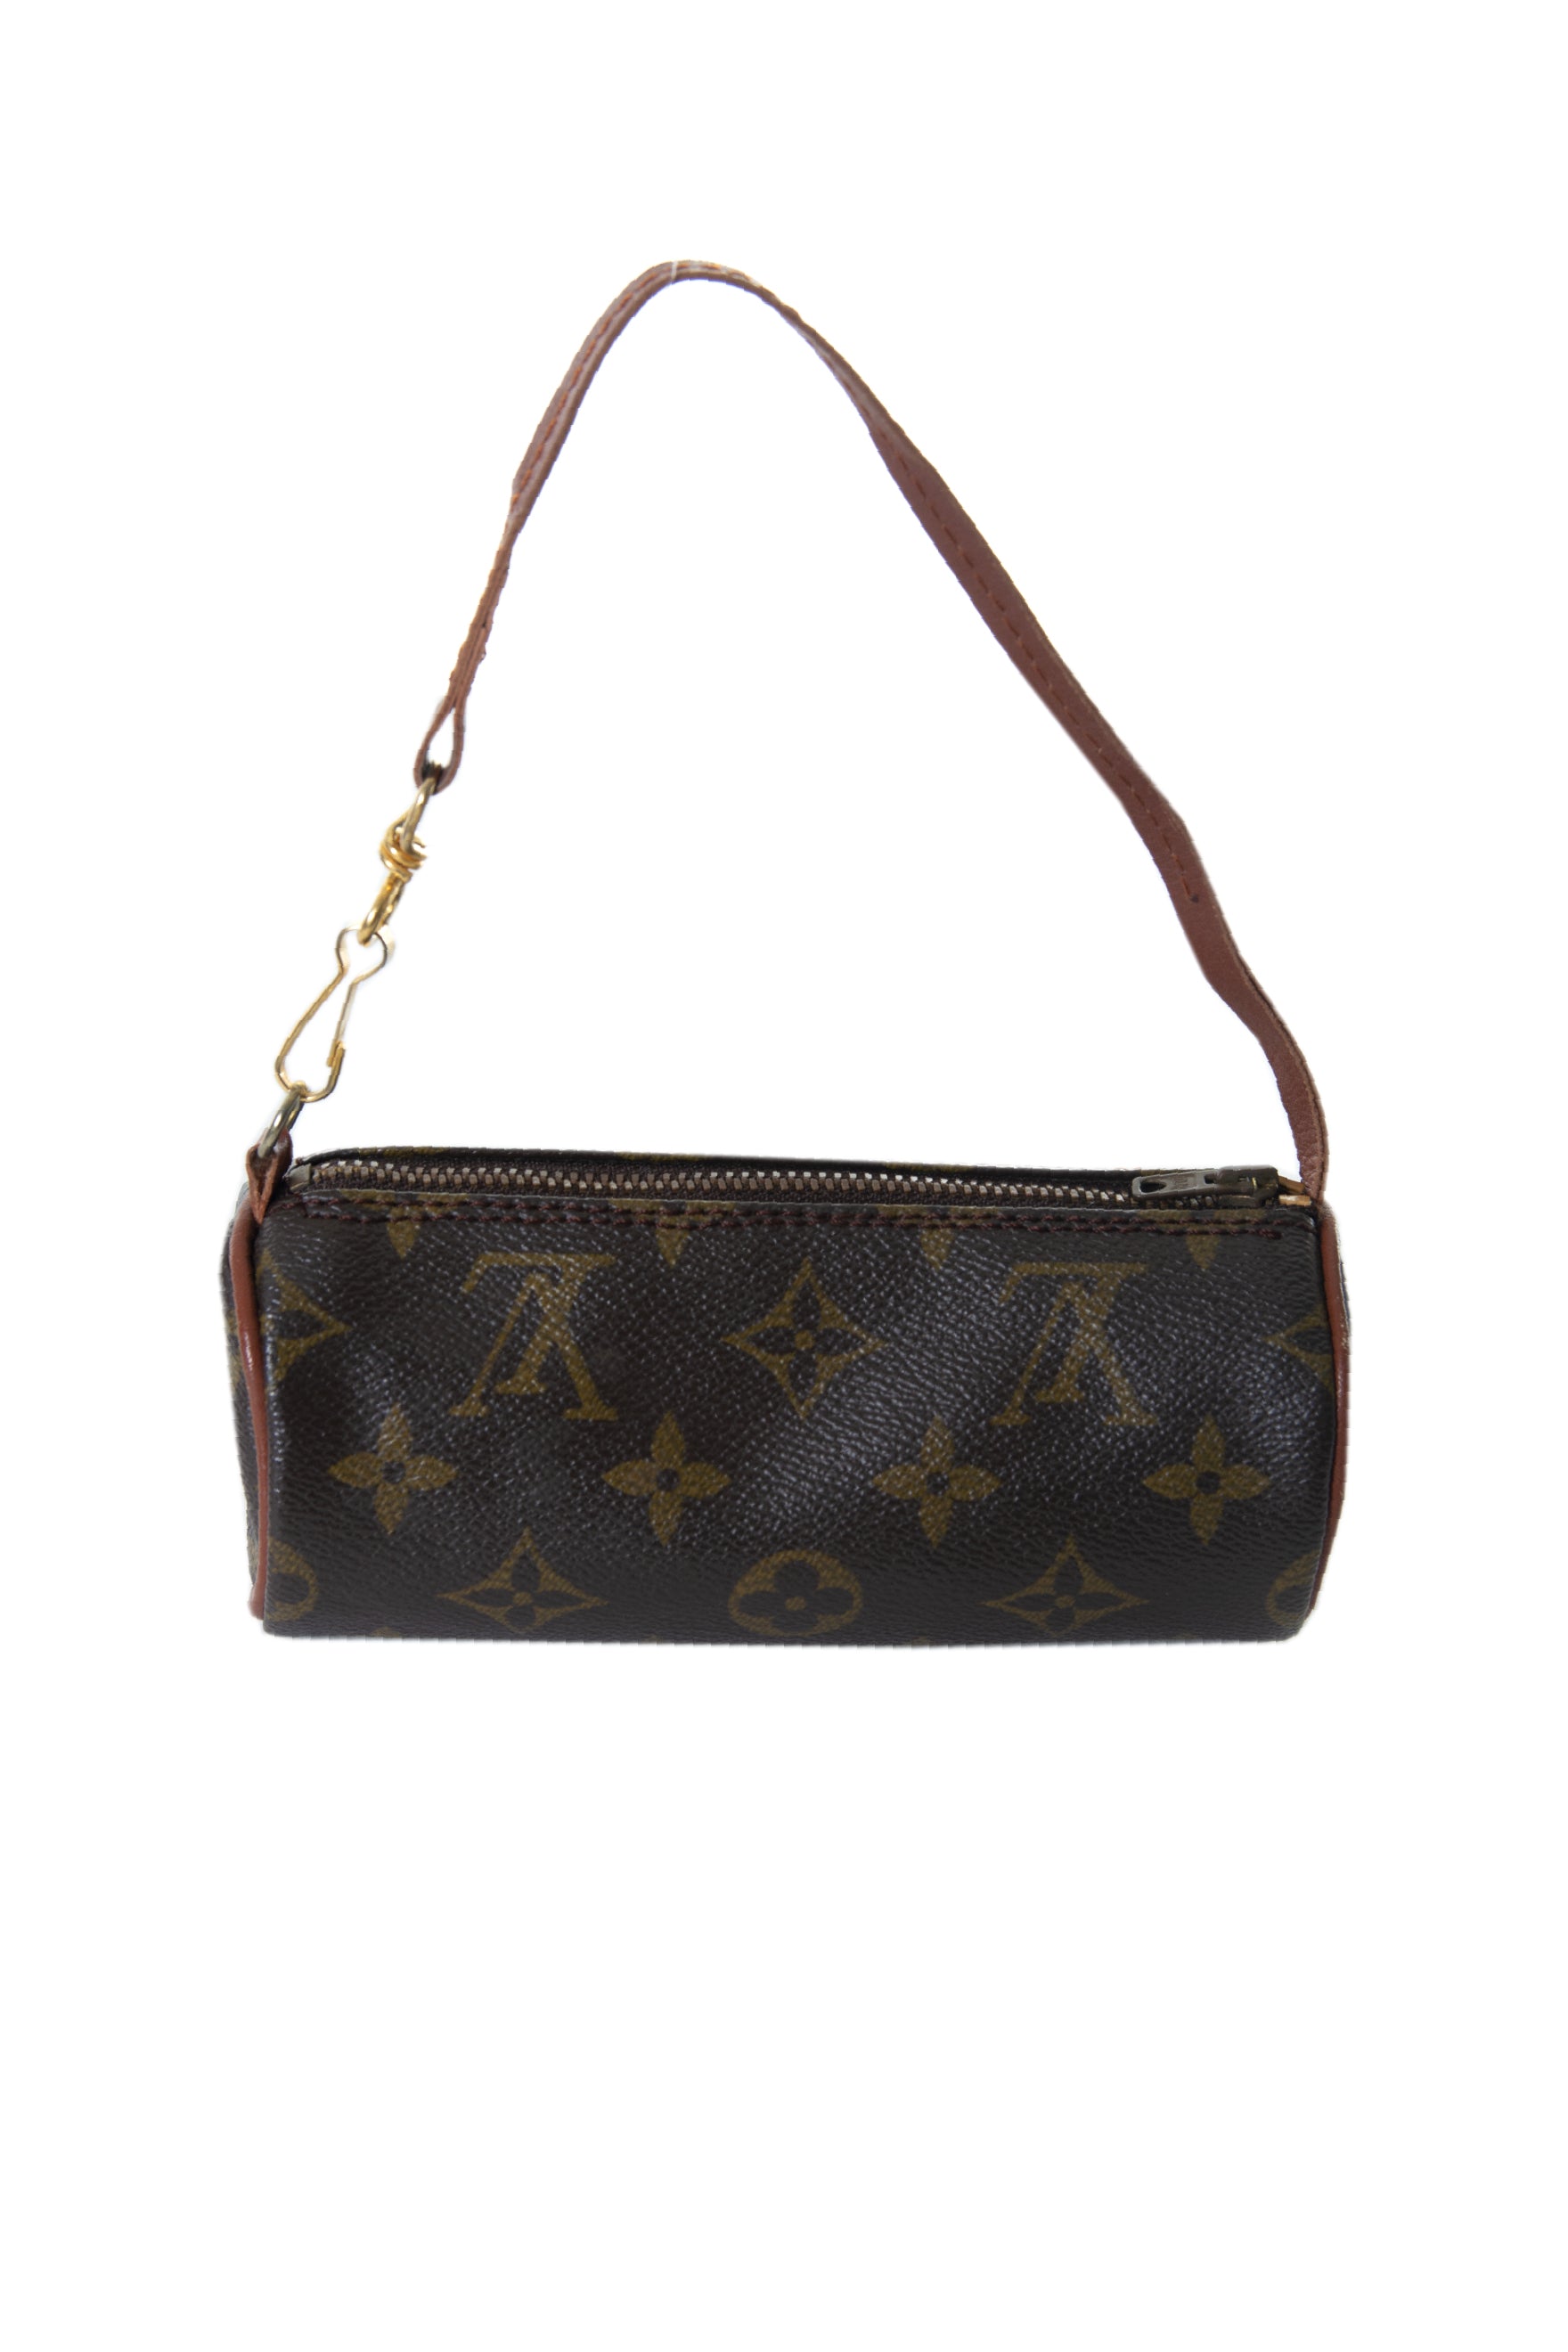 Louis Vuitton Mini Papillon Bag - 2 For Sale on 1stDibs